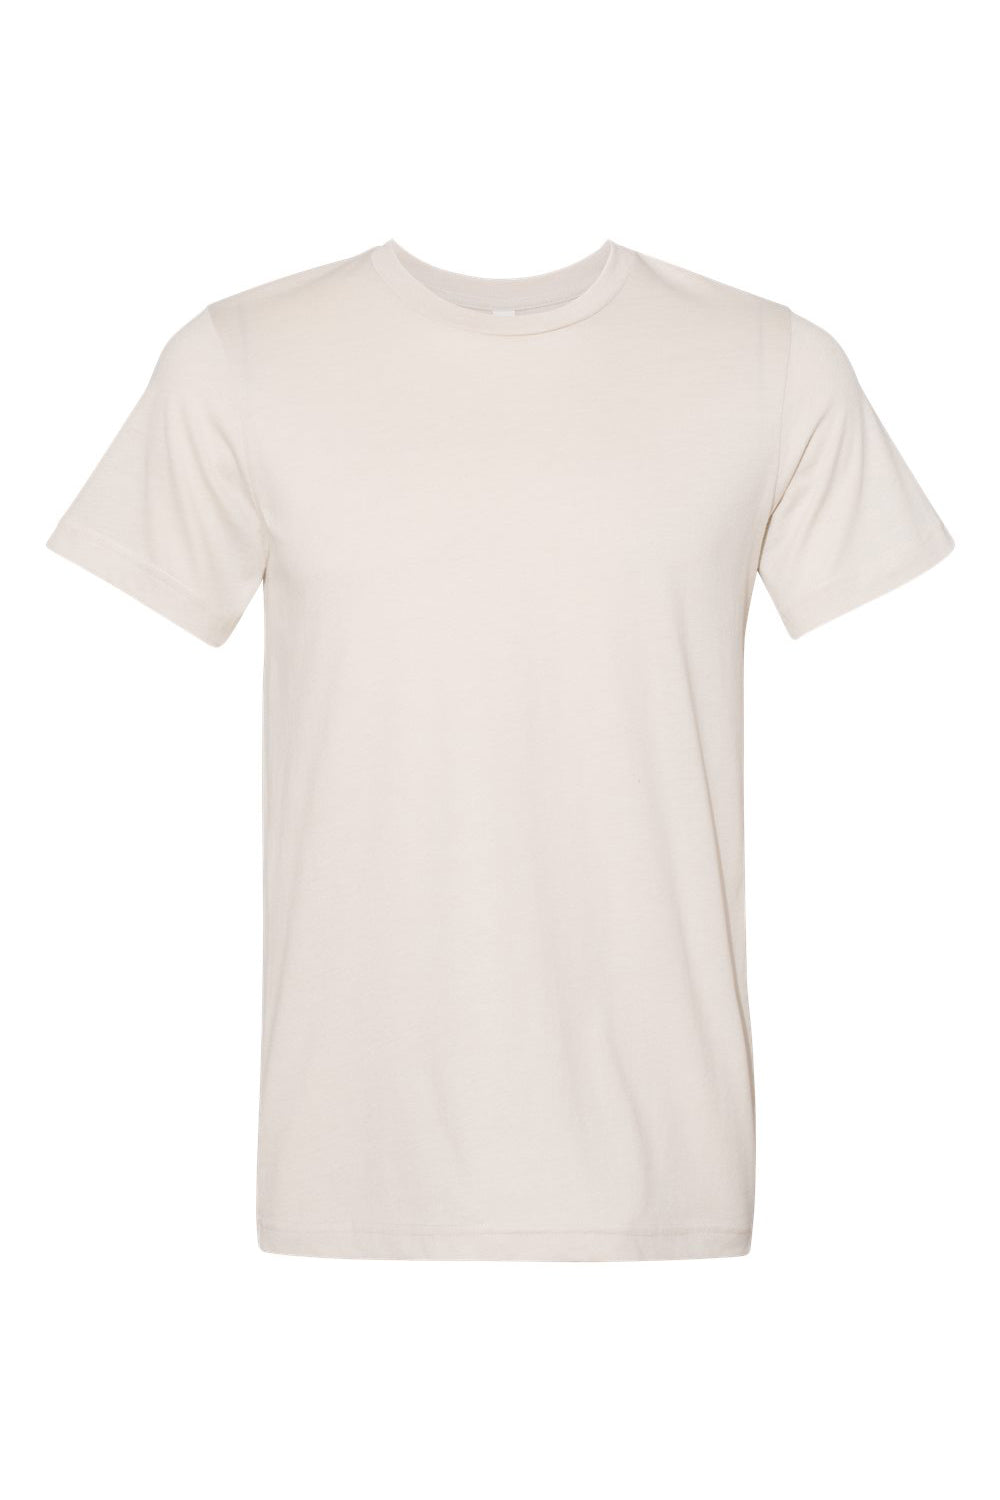 Bella + Canvas BC3301/3301C/3301 Mens Jersey Short Sleeve Crewneck T-Shirt Heather Dust Flat Front